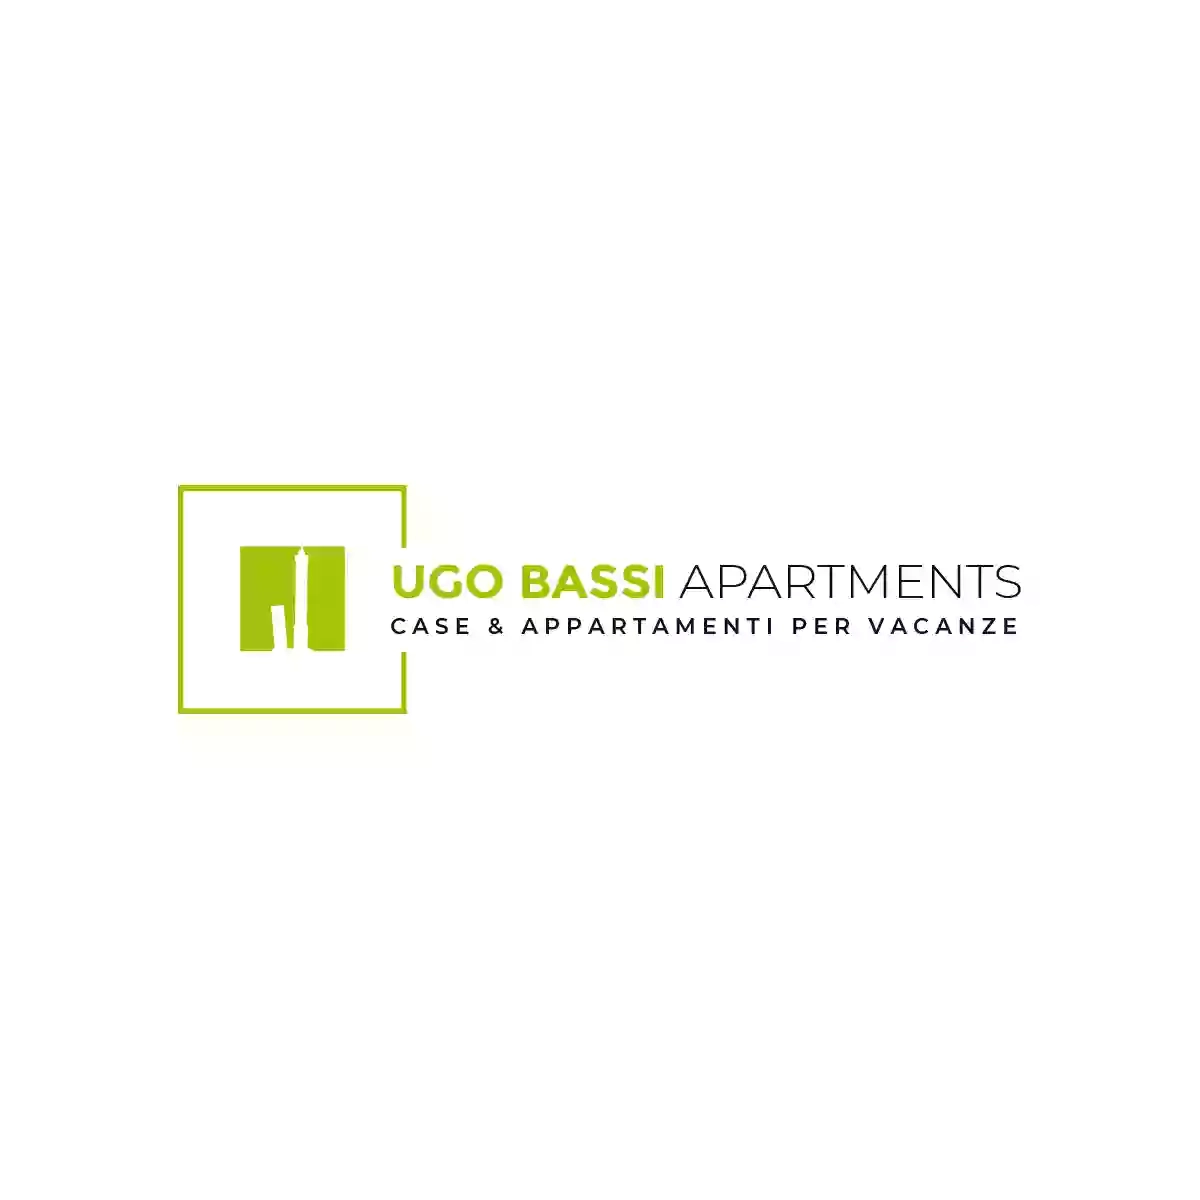 Ugo Bassi Apartments